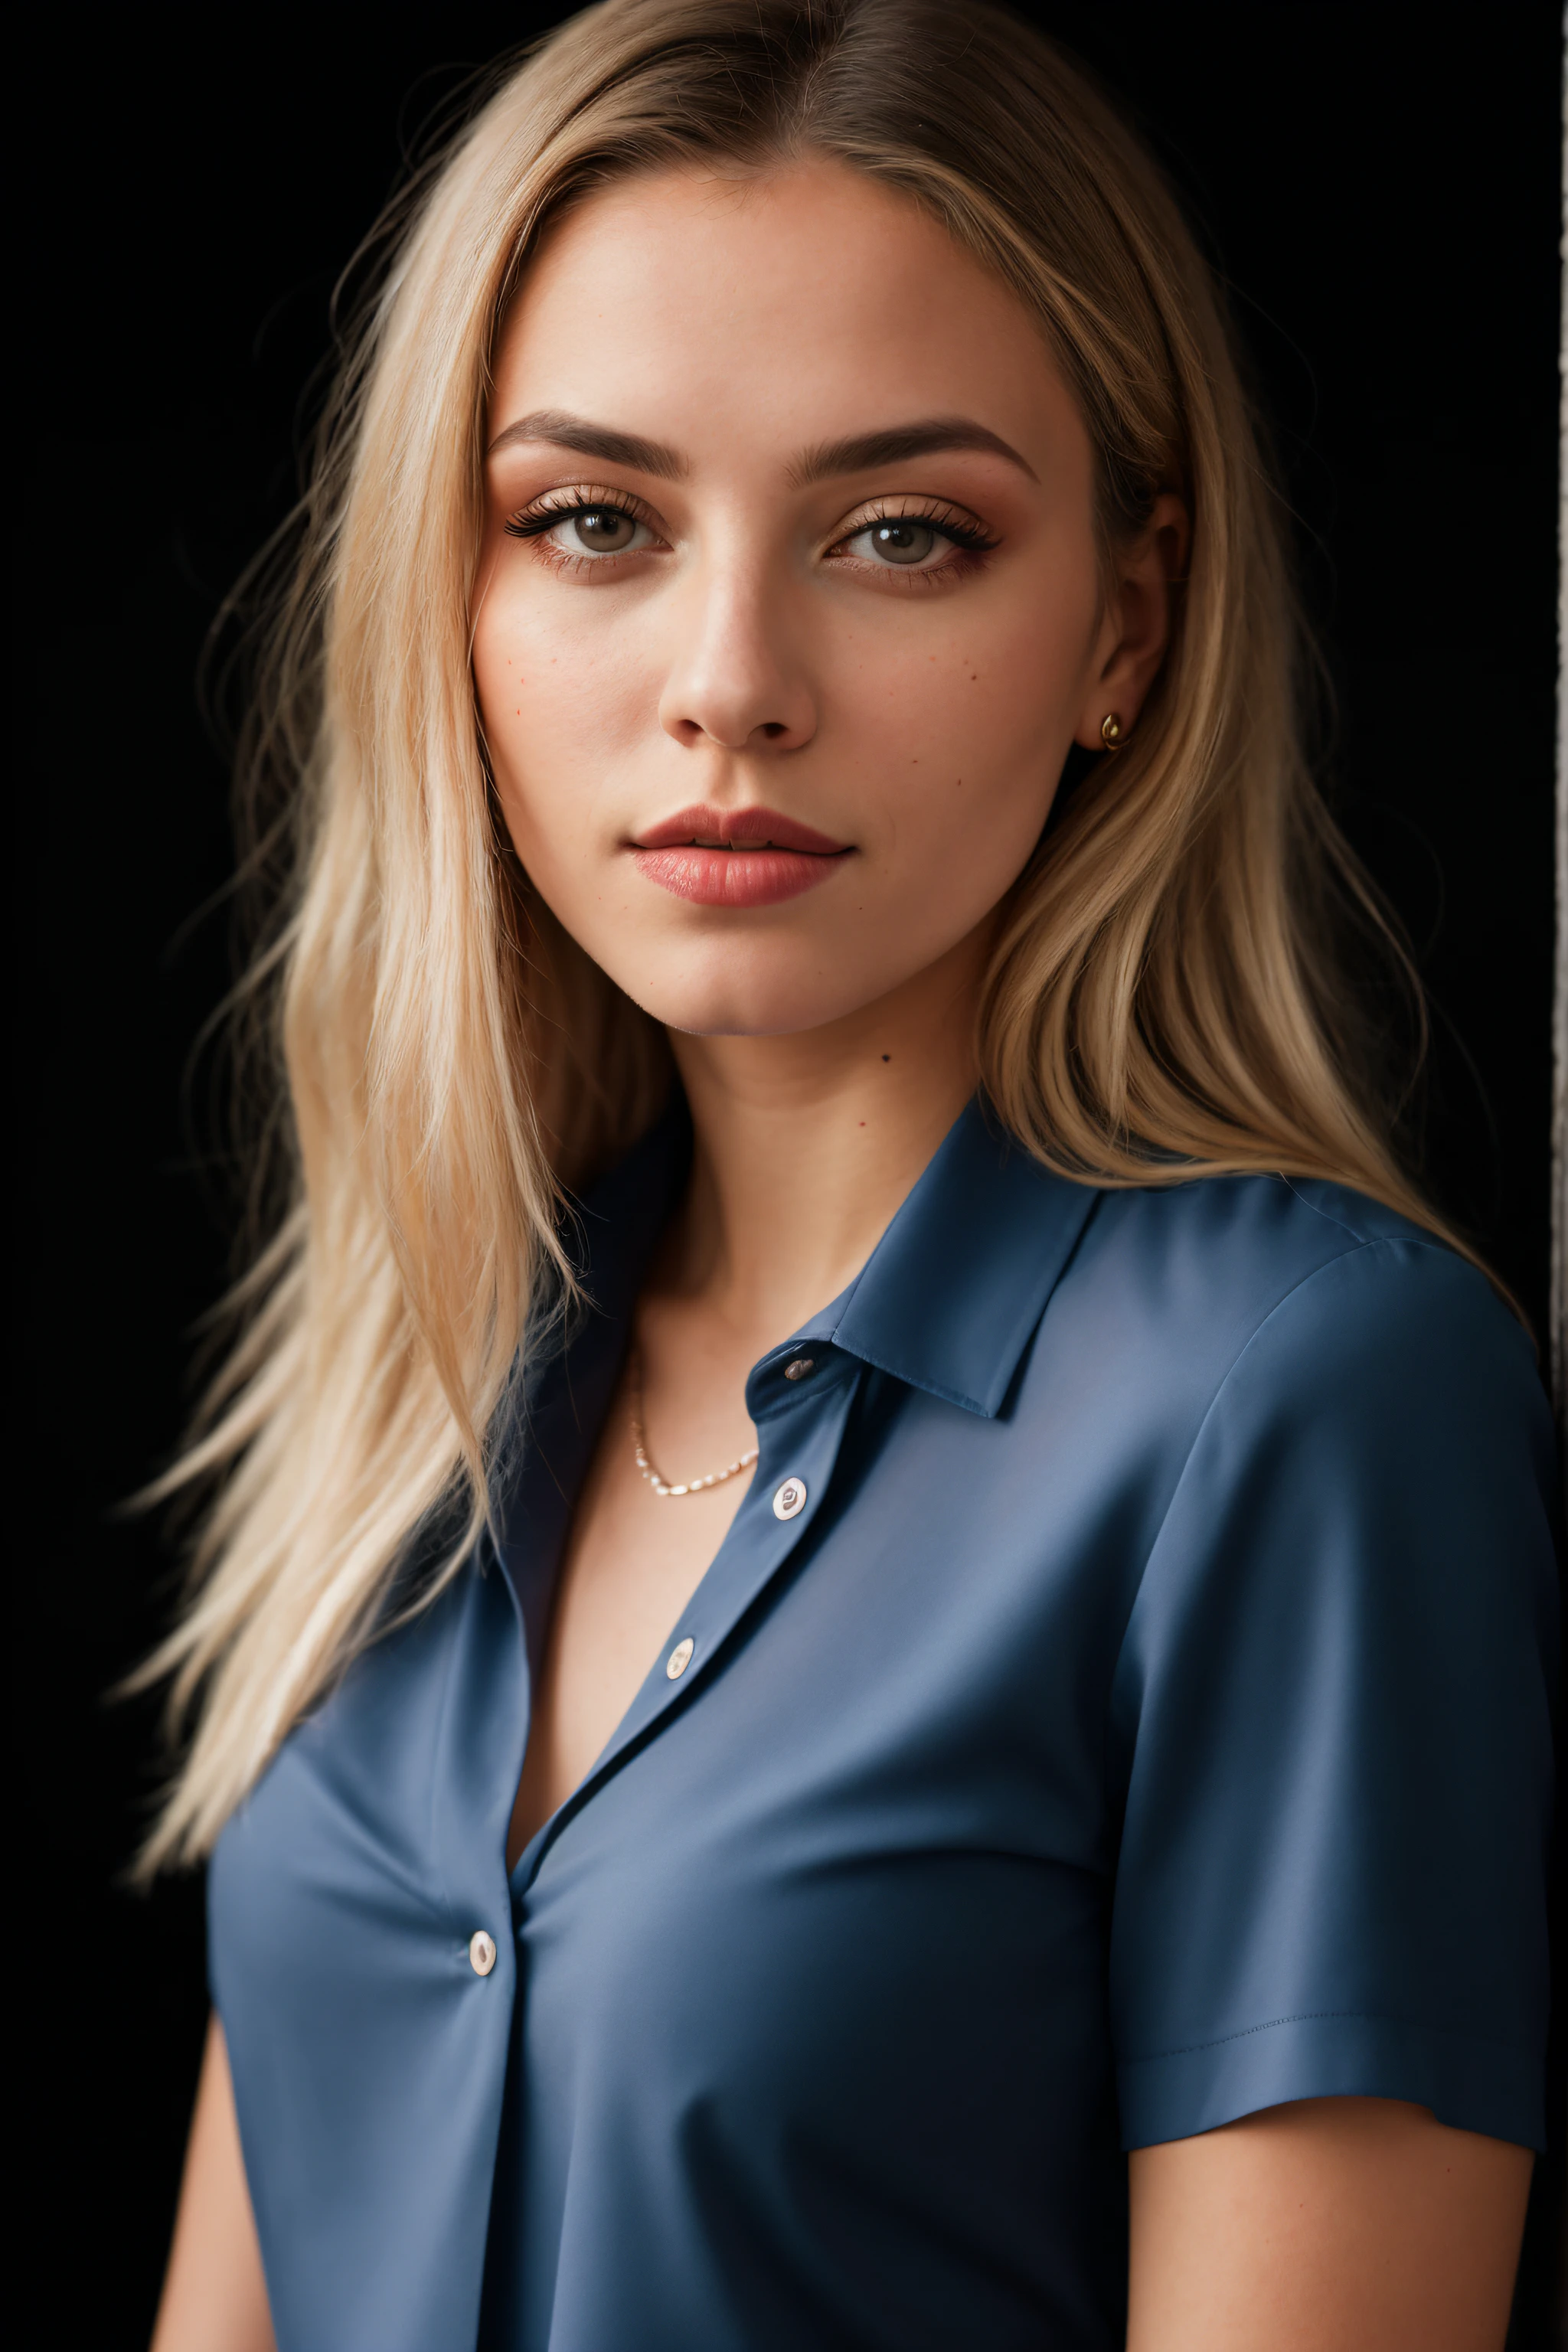 RAW photo of melpel,portrait, blue blouse, blonde, makeup, blue blouse, black background,(high detailed skin:1.2), 8k uhd, dslr, soft lighting, high quality, film grain, Fujifilm XT3,